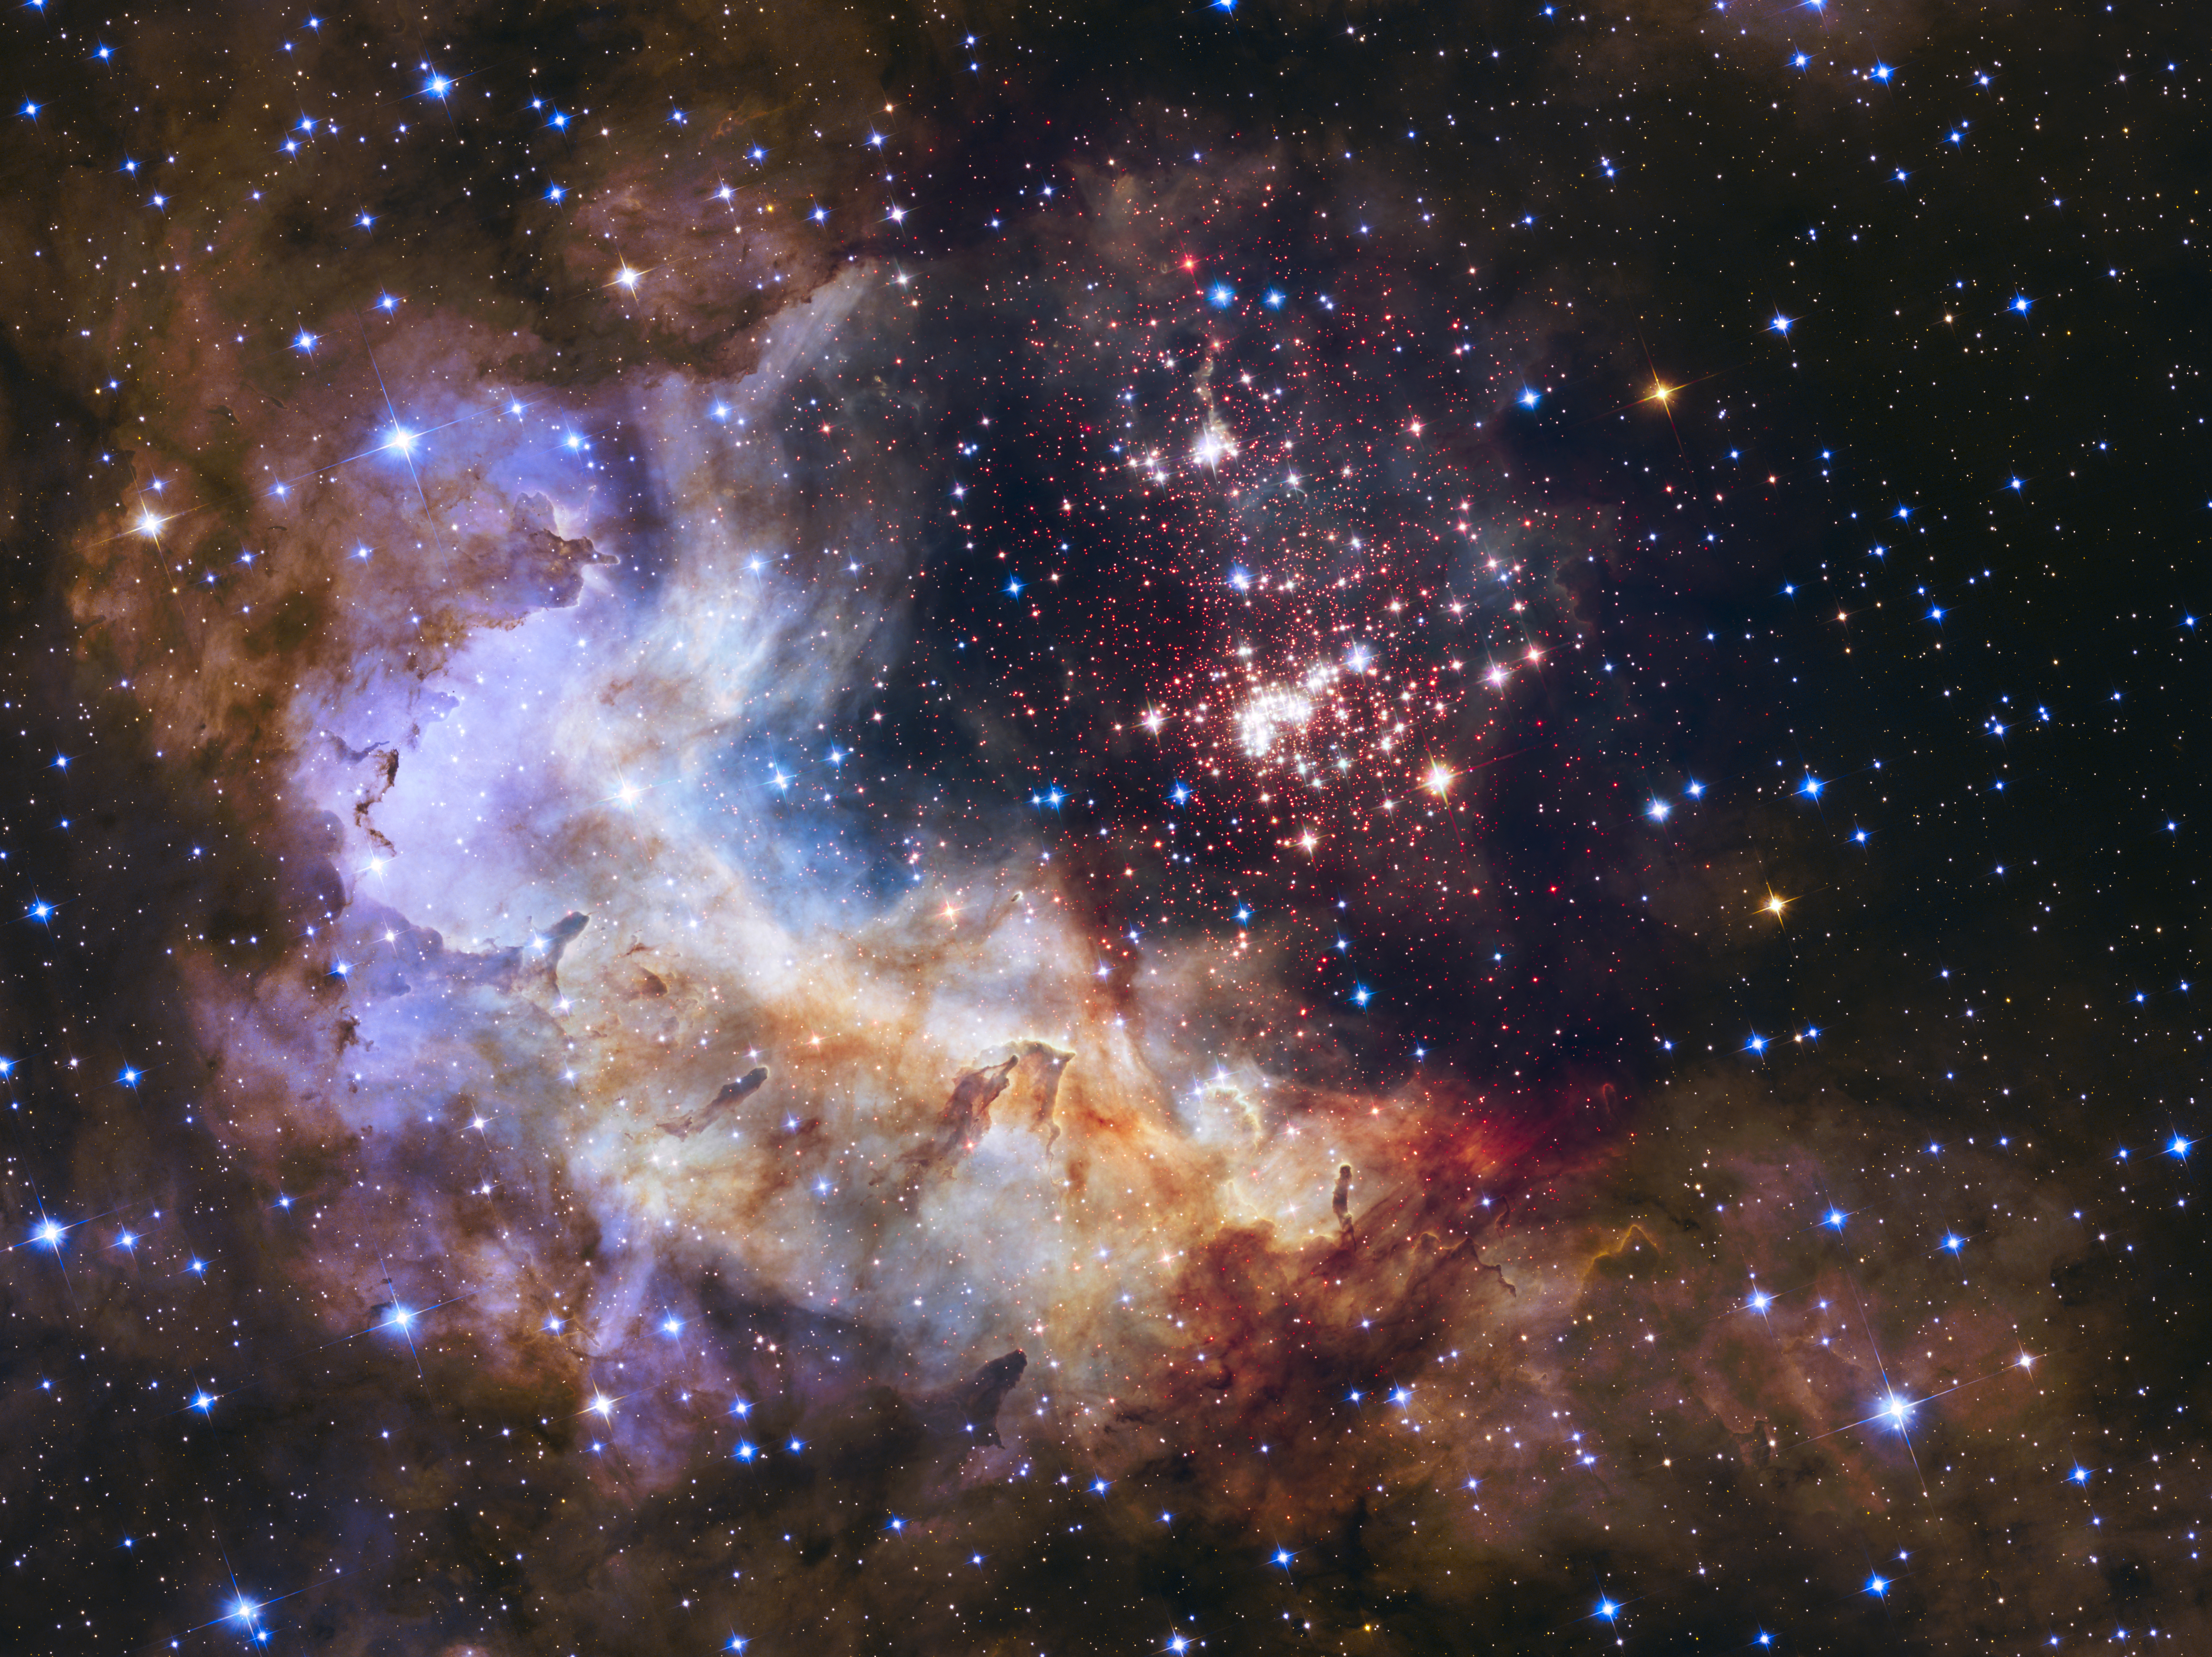 Star Cluster Westerlund 2 in Nebula Gum 29 - Hubble Space Telescope